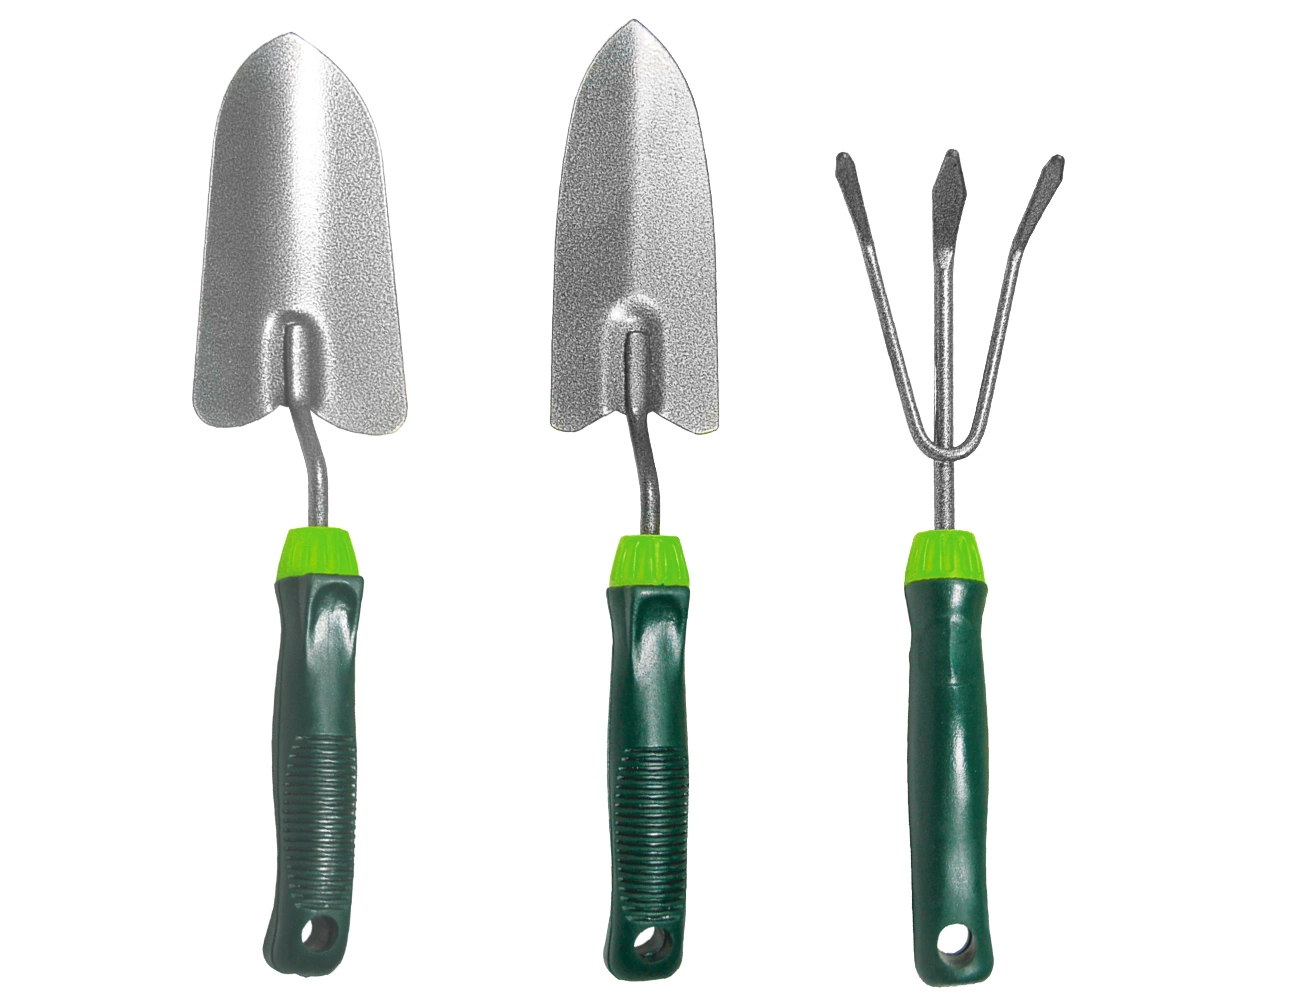 3PCS Garden Tools Set Including Hand Trowel, Transplanter, Cultivator, Shovel, Spade